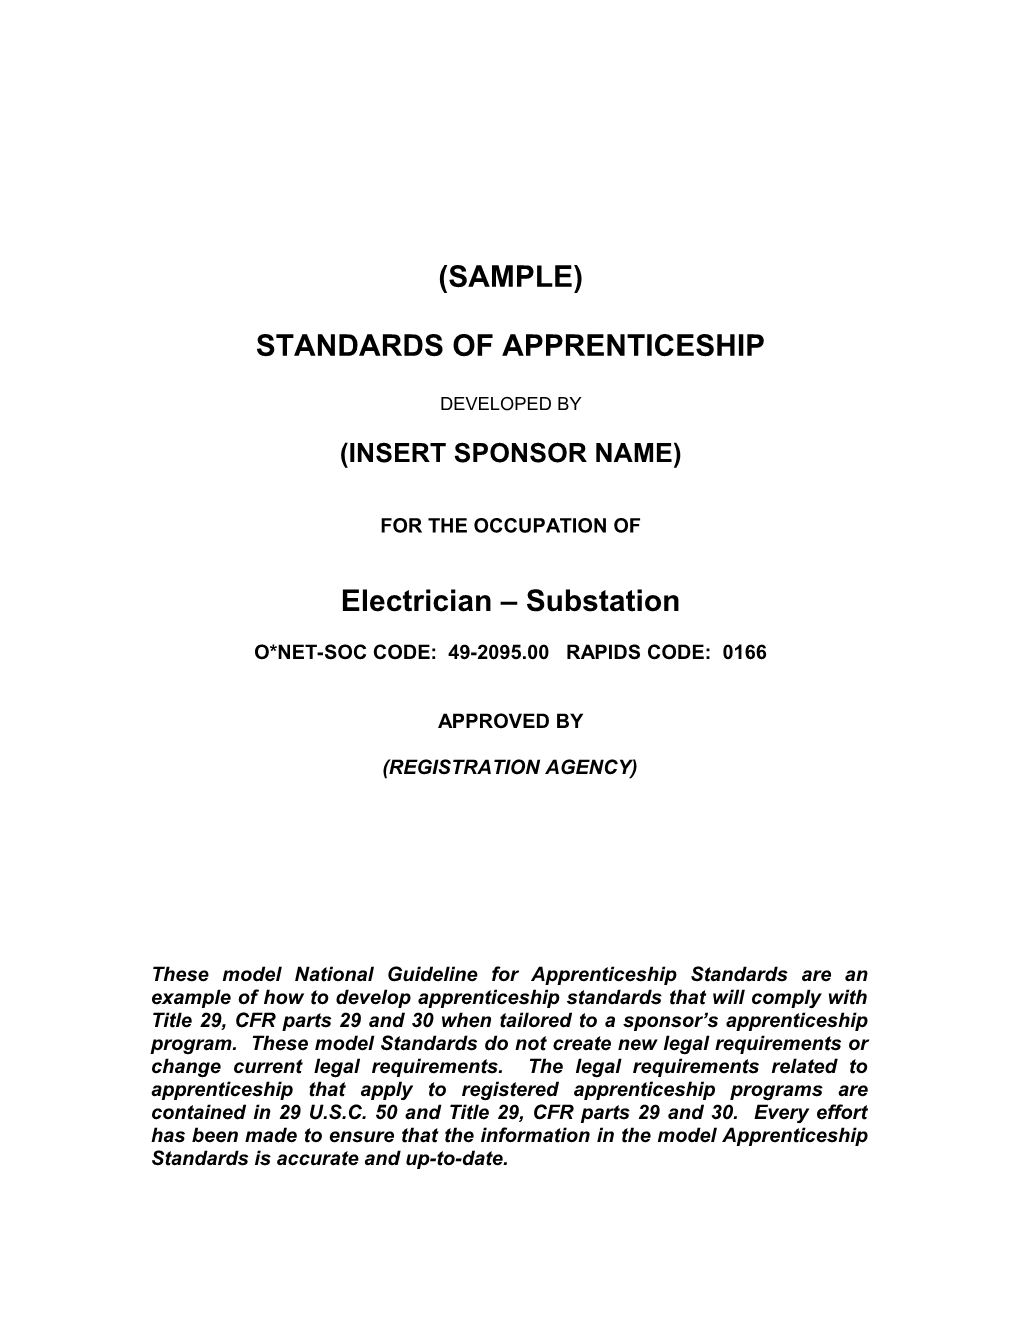 Standards of Apprenticeship